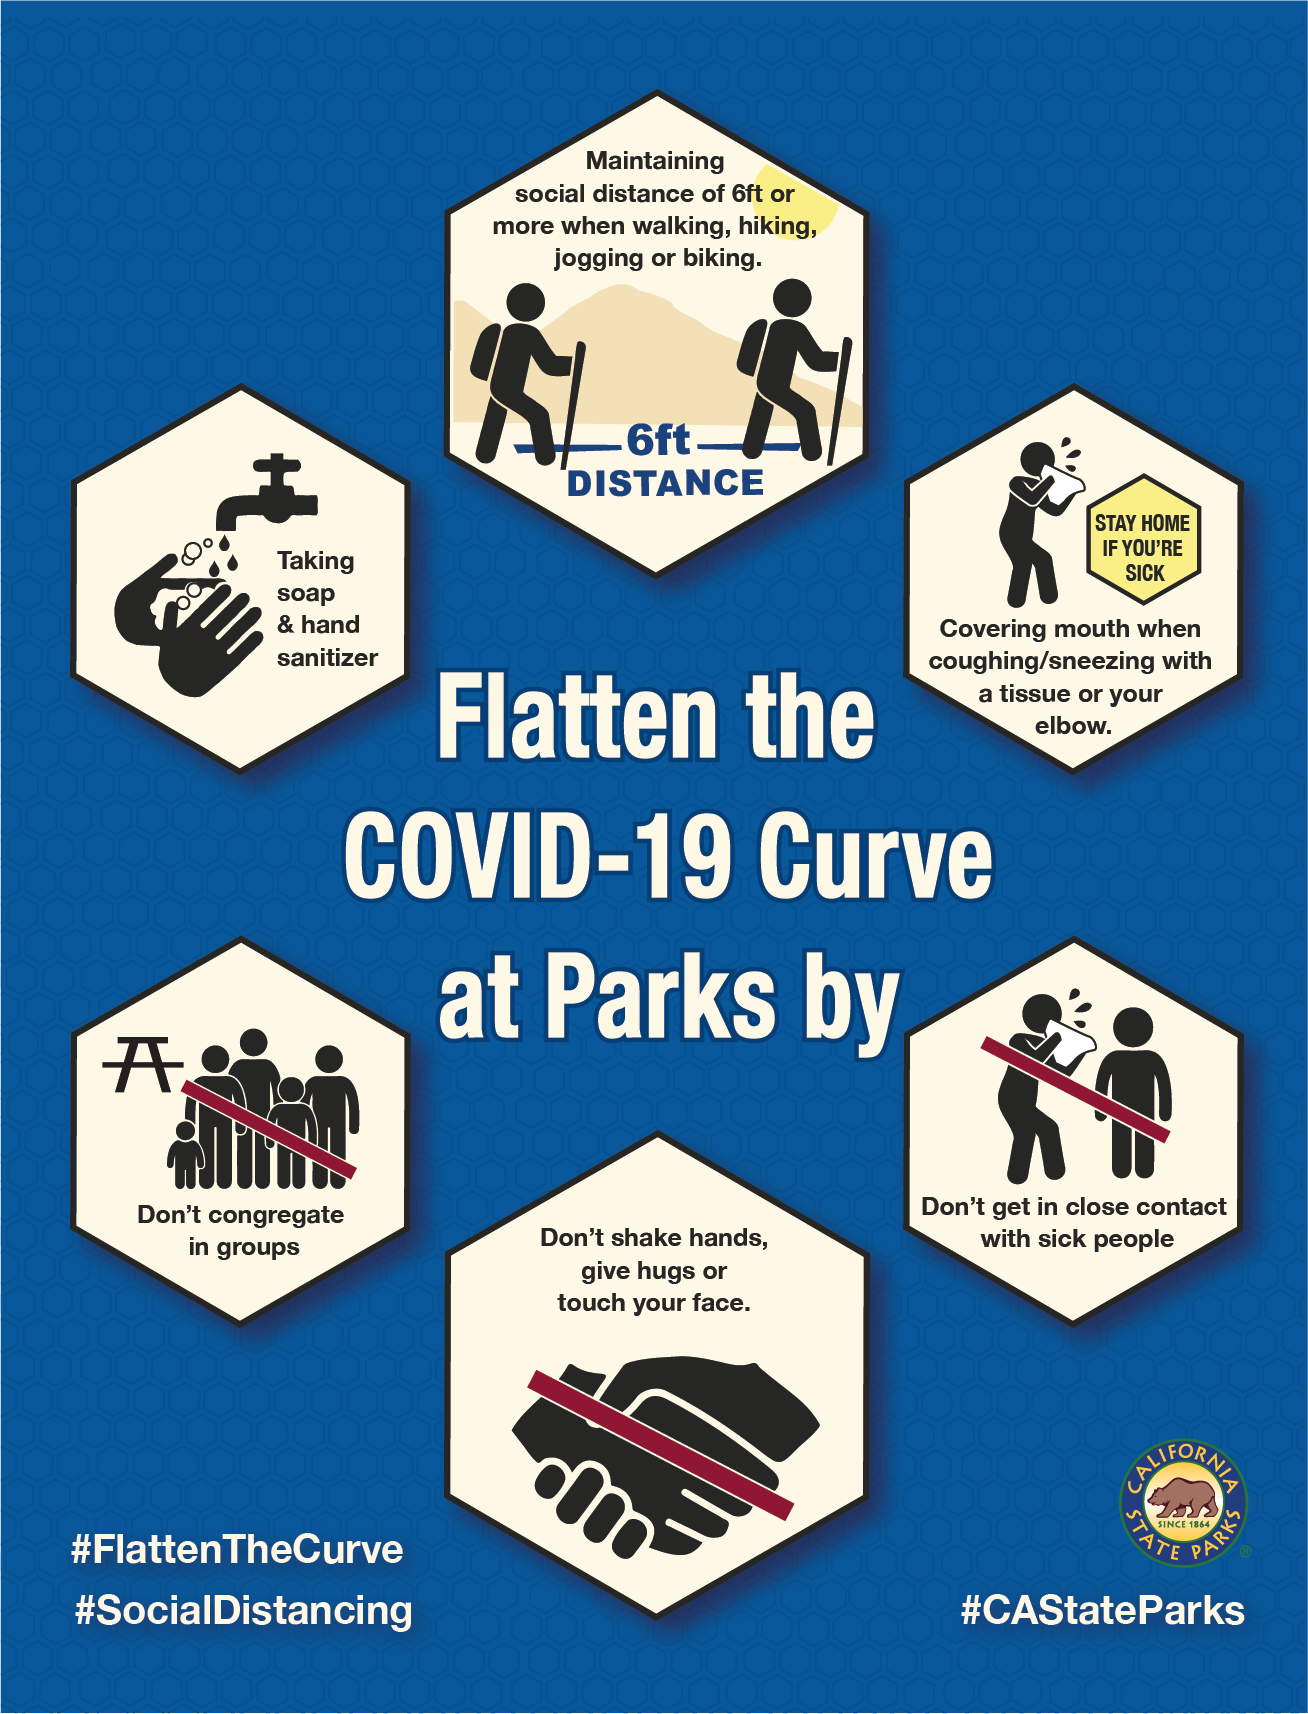 Flatten the COVID-19 Curve image